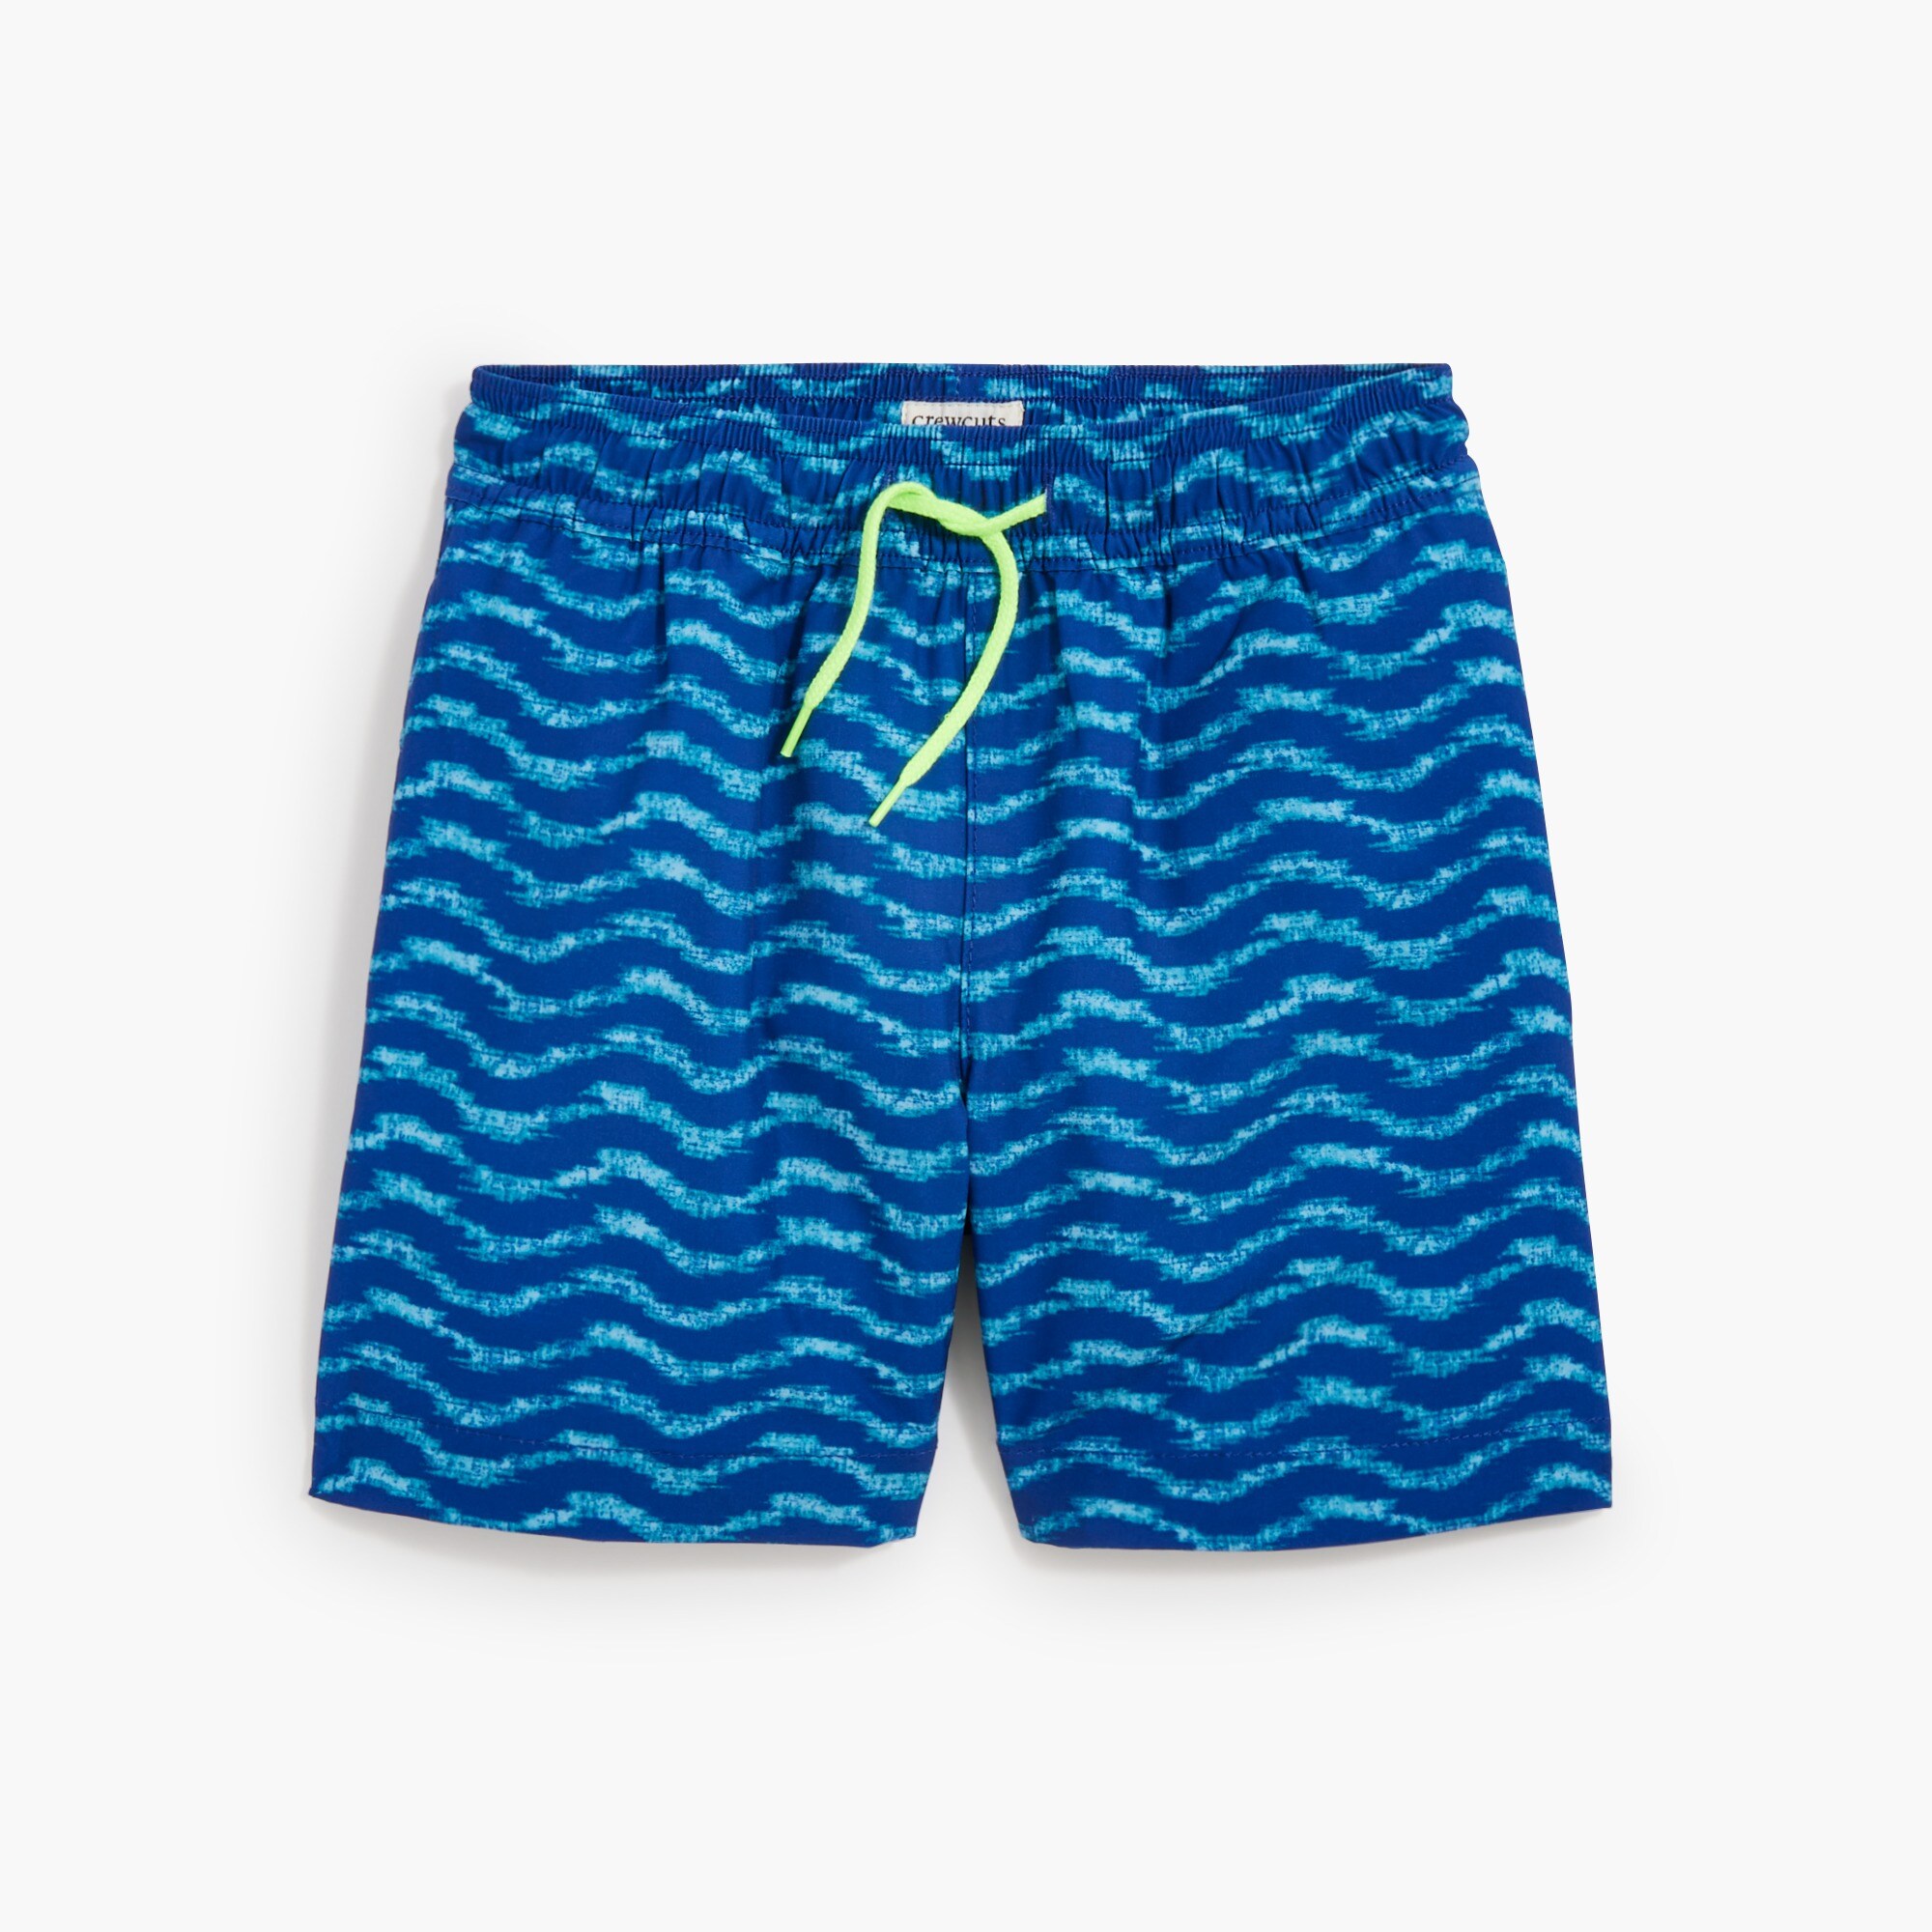  Boys' wave-print swim trunk